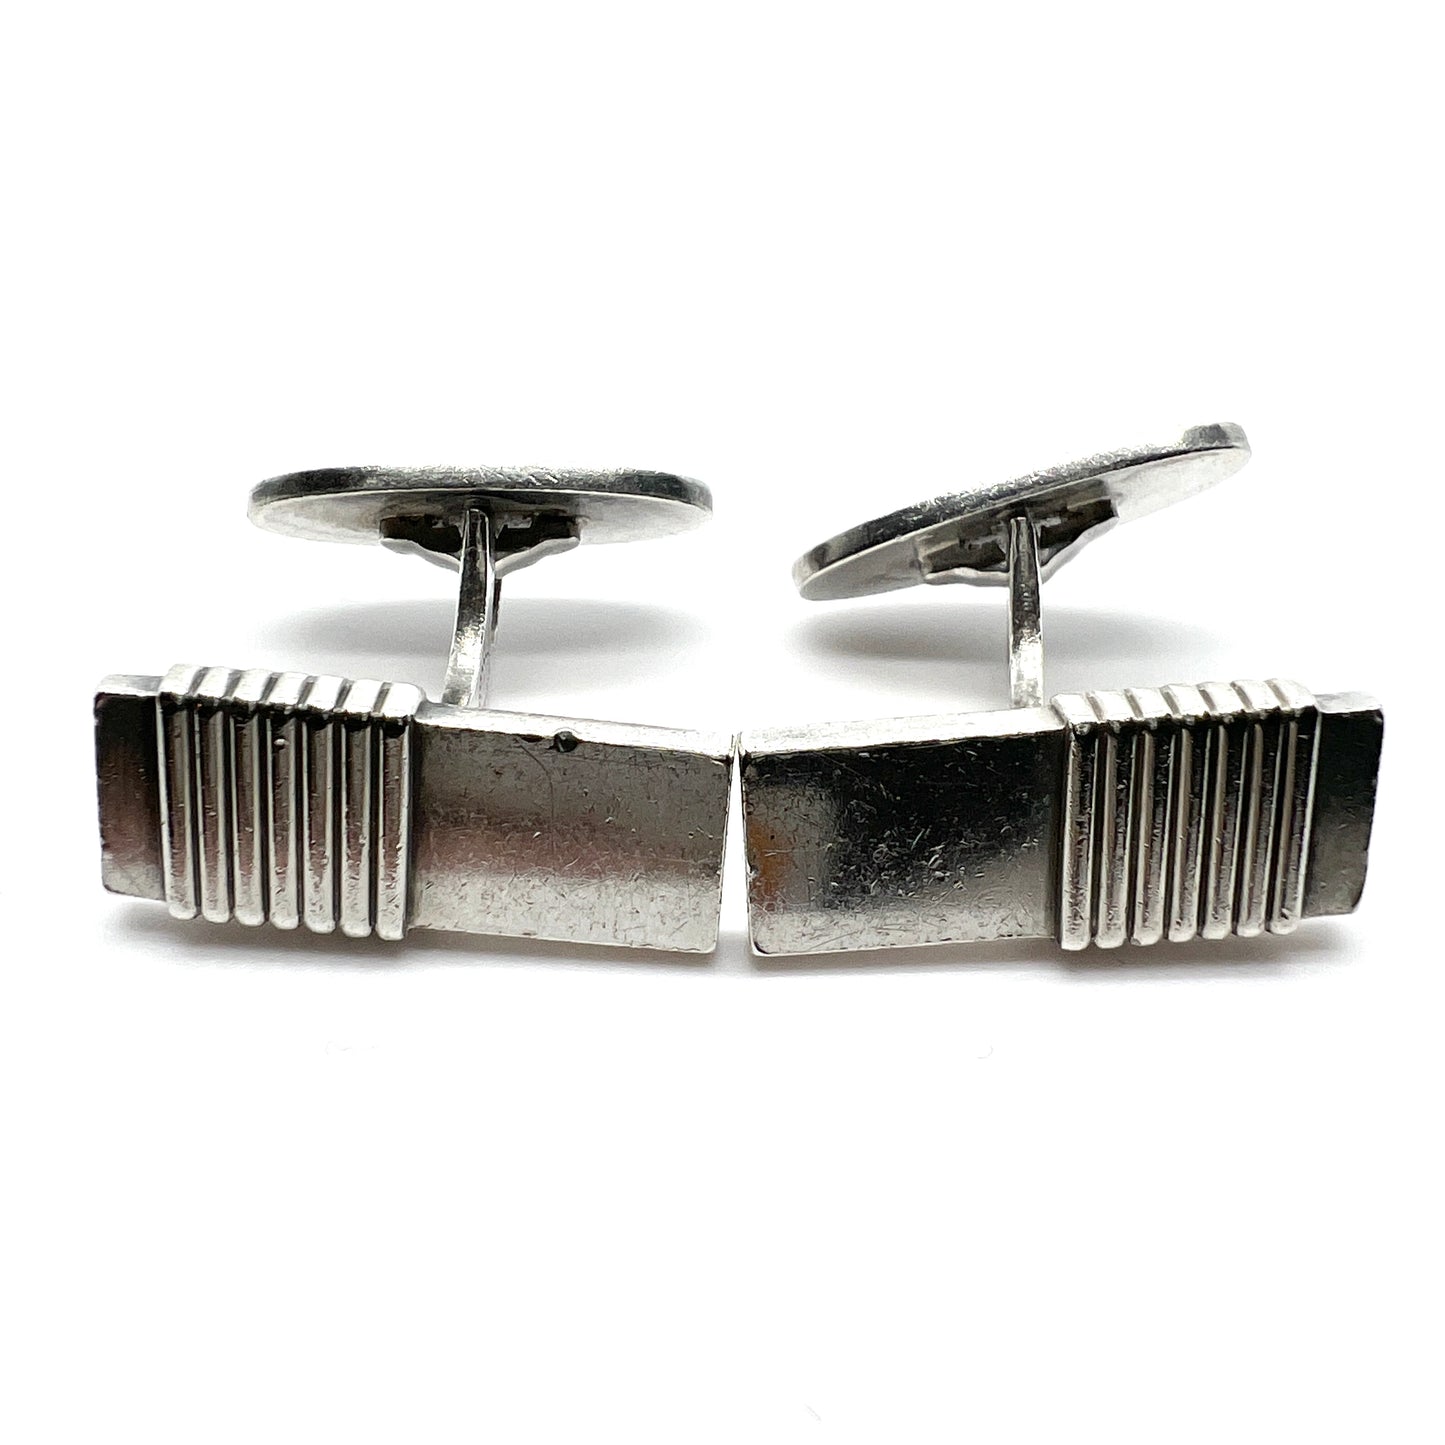 Georg Jensen, Denmark. Vintage Sterling Silver Cufflinks. Design 80 by Harald Nielsen.